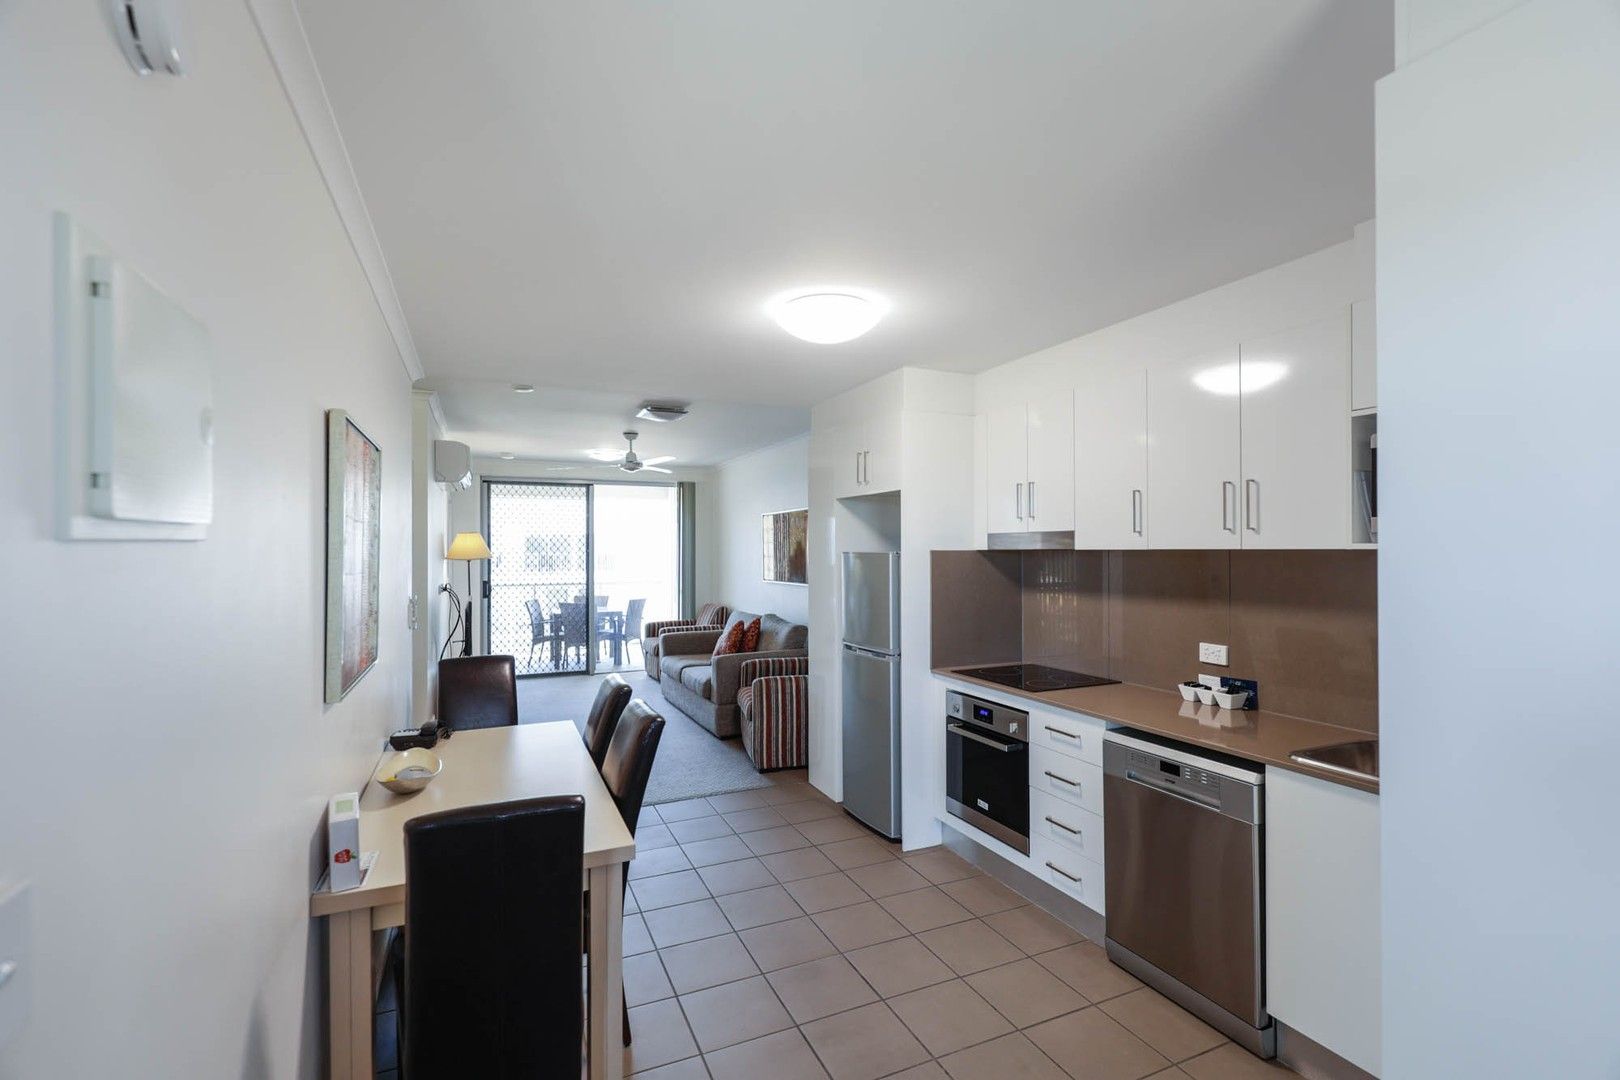 2 bedrooms Apartment / Unit / Flat in 21/11 Bacon Street MORANBAH QLD, 4744